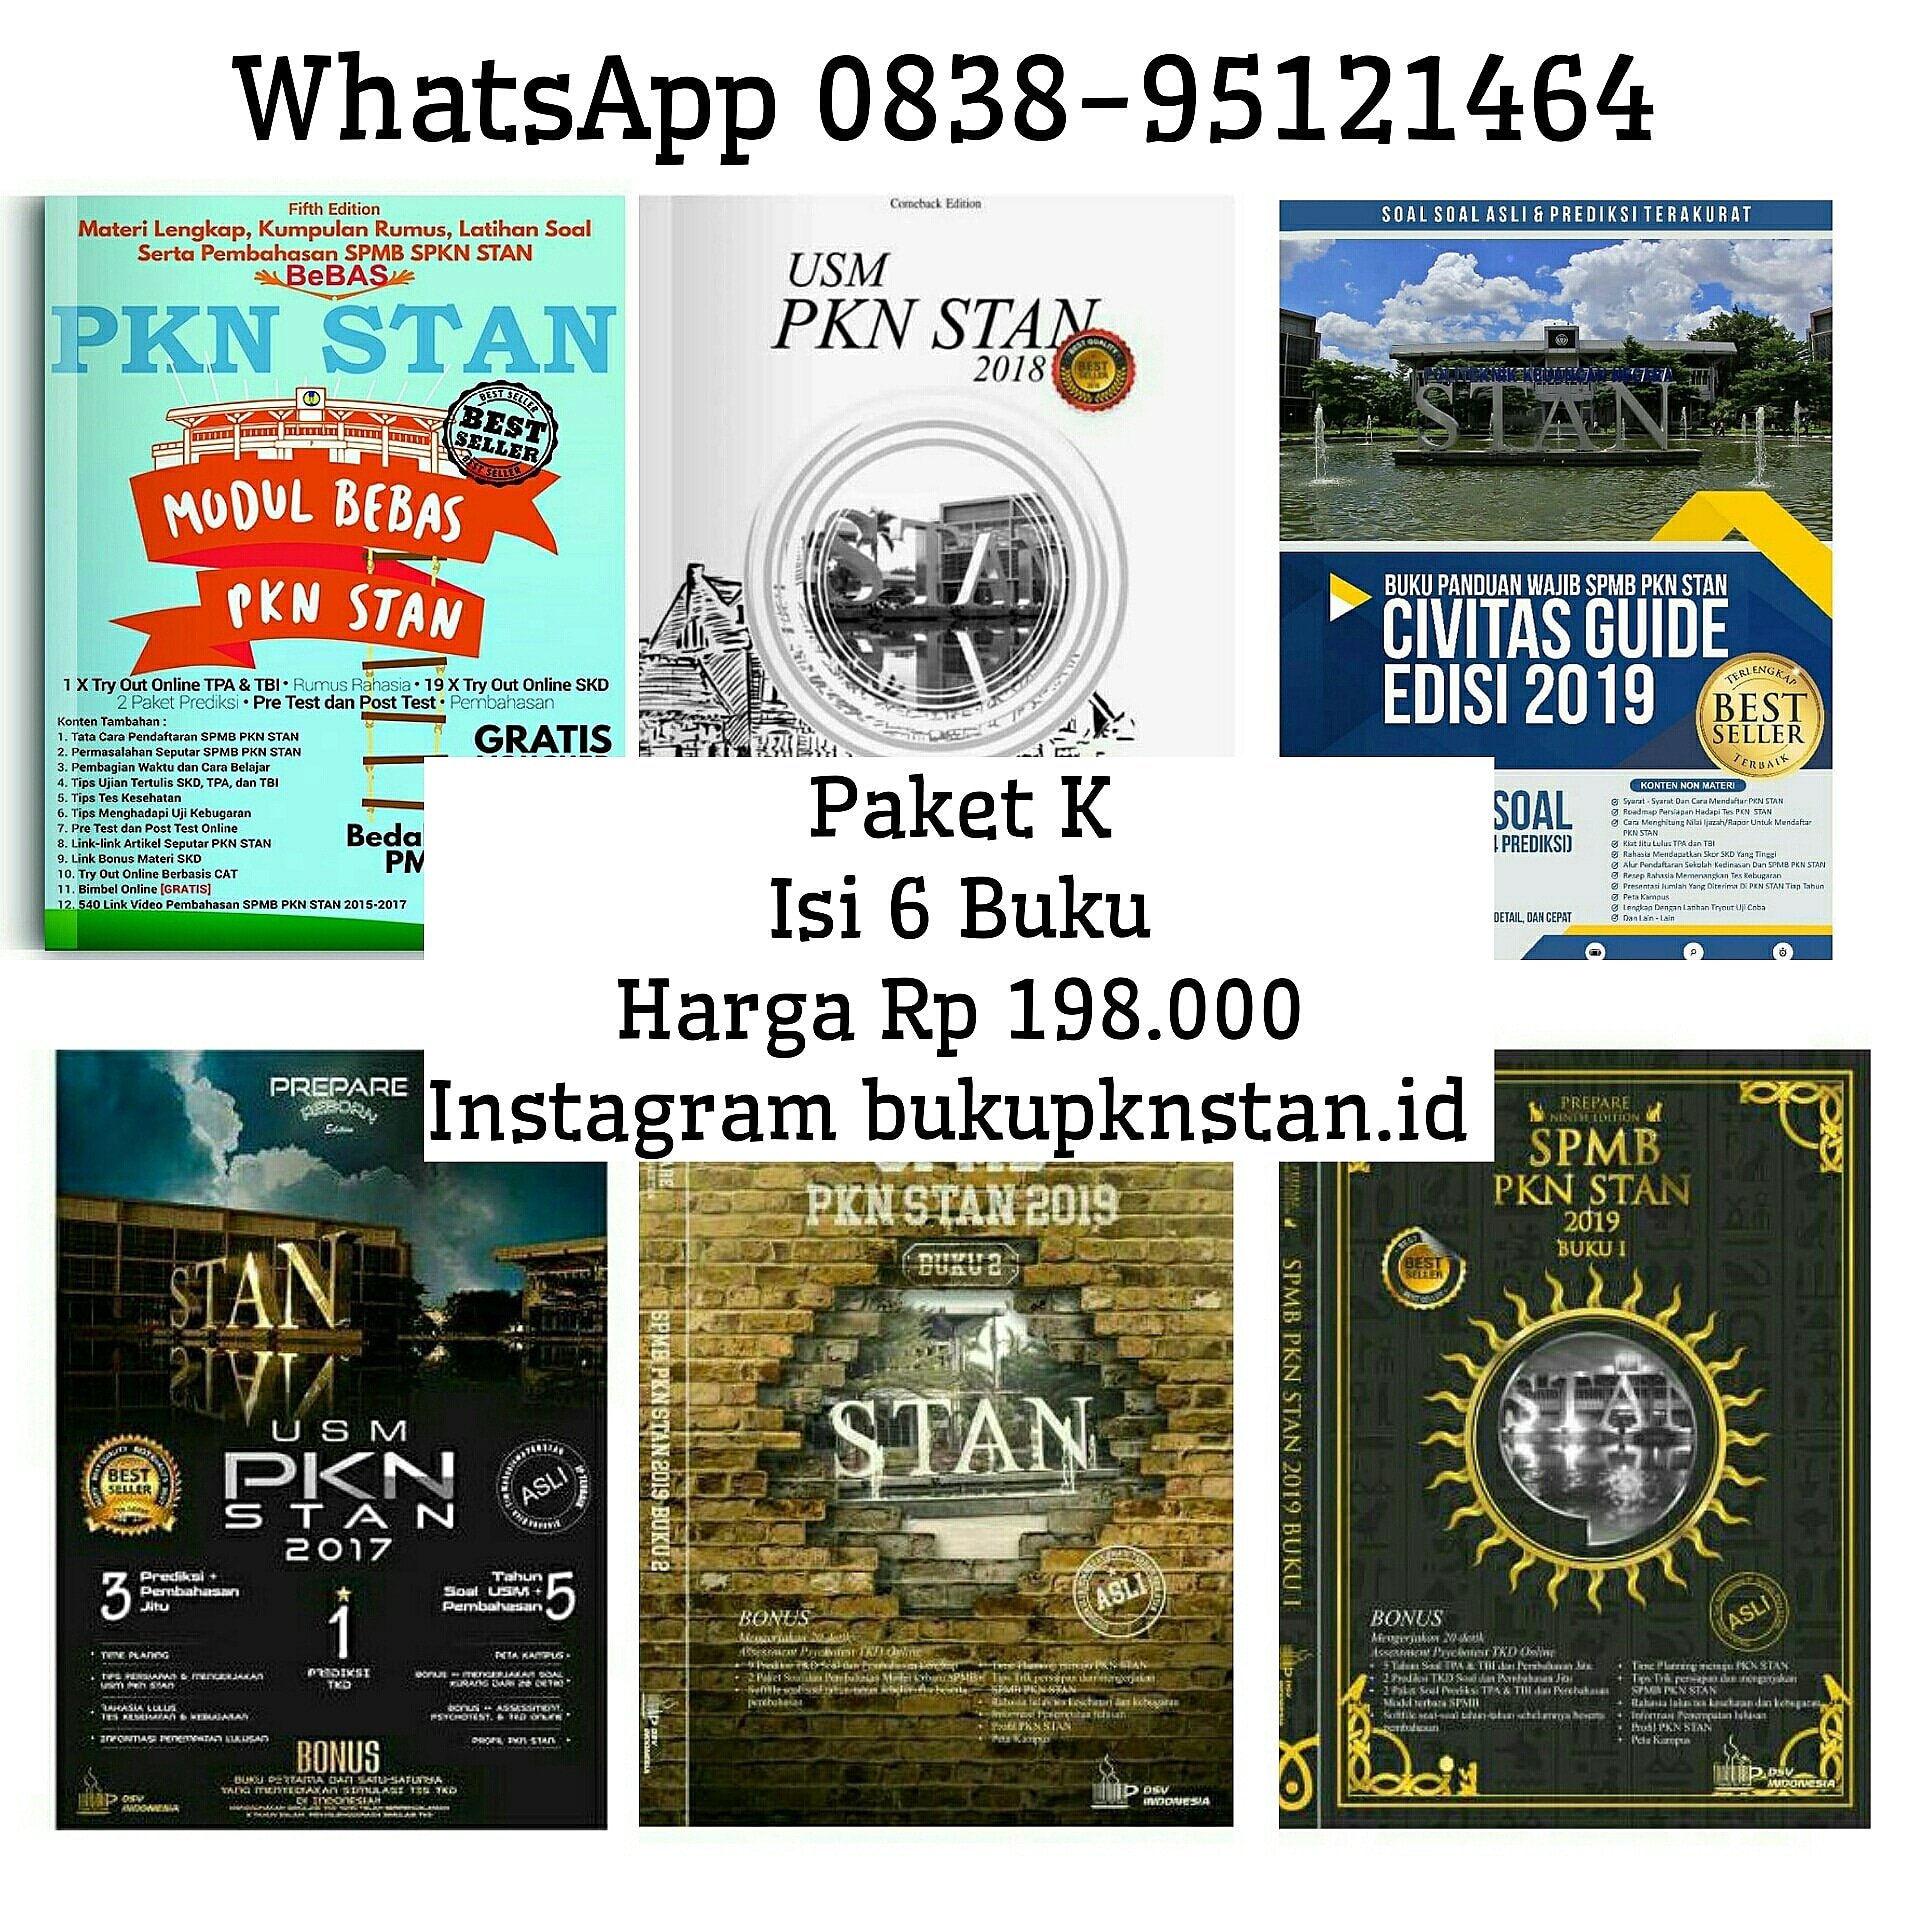 BUKU SPMB PKN STAN 2019 on Twitter "BUKU SPMB PKN STAN 2019 Promo free ongkir = Jangan lupa follow instagram kita ya